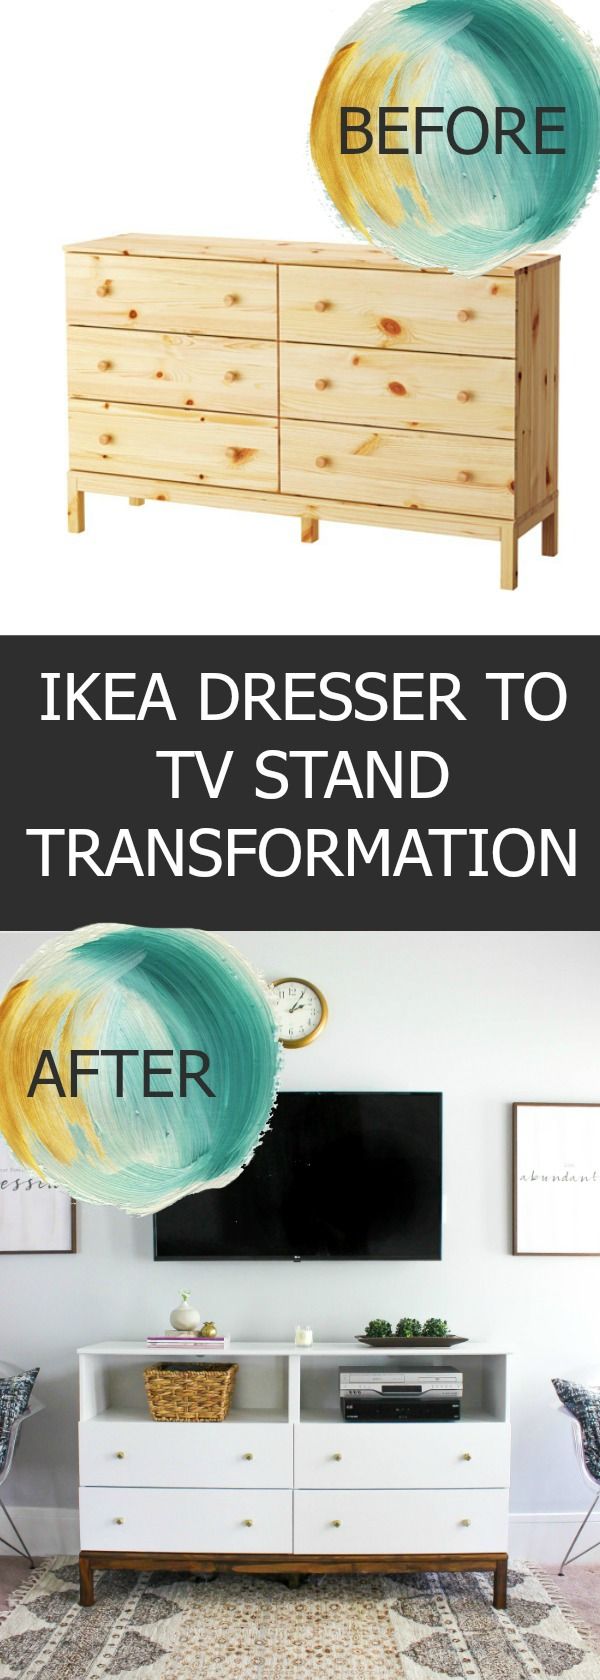 IKEA Dresser to TV Stand Transformation